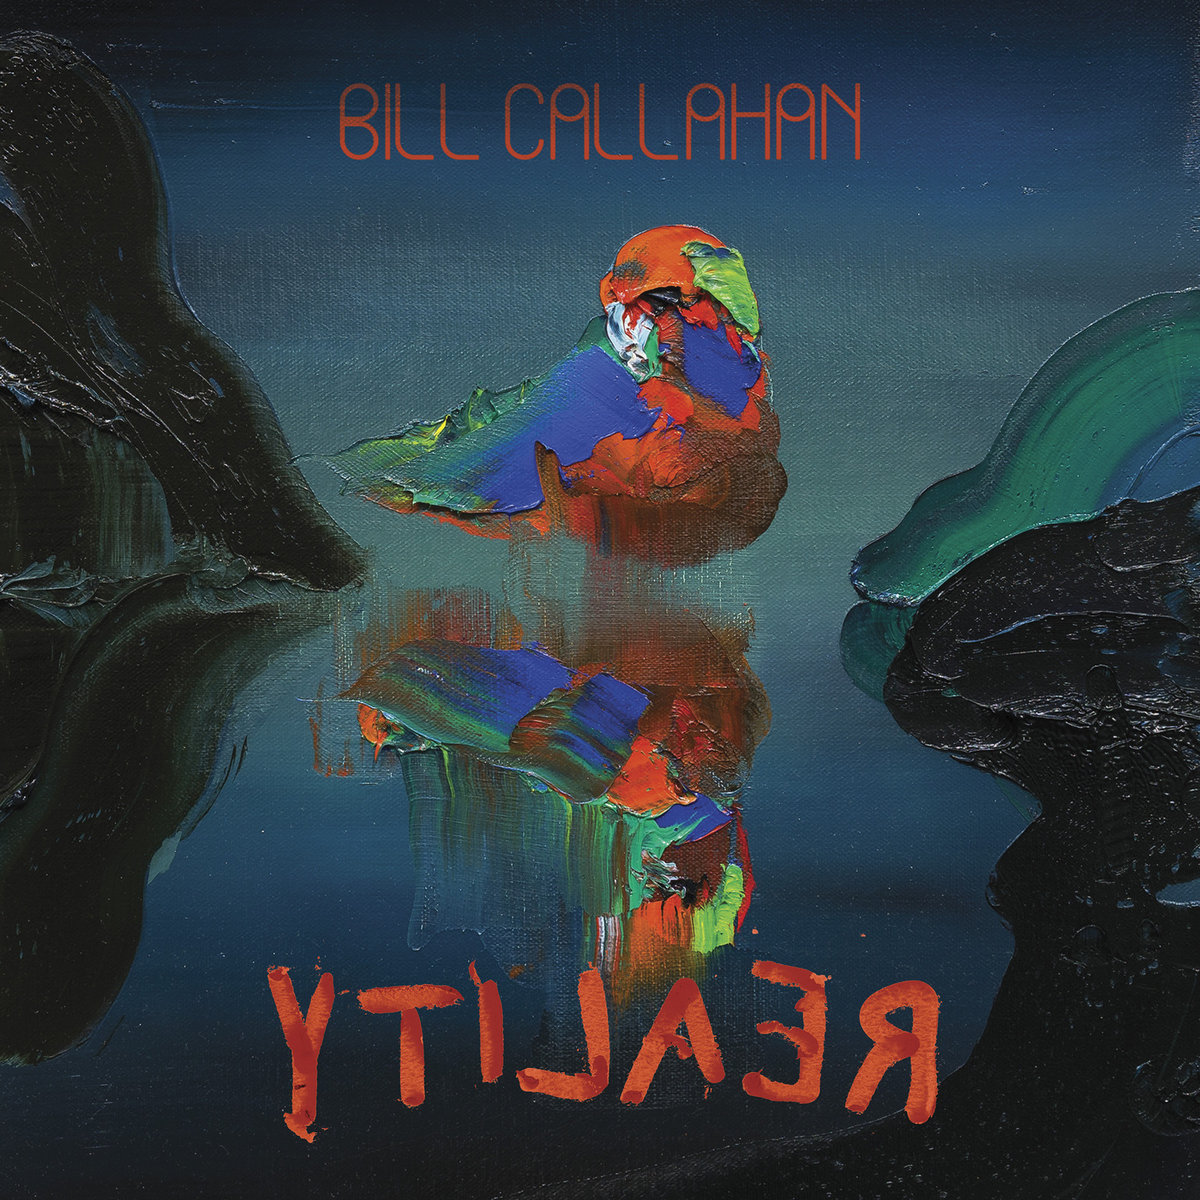 Bill Callahan YTI⅃AƎЯ cover artwork